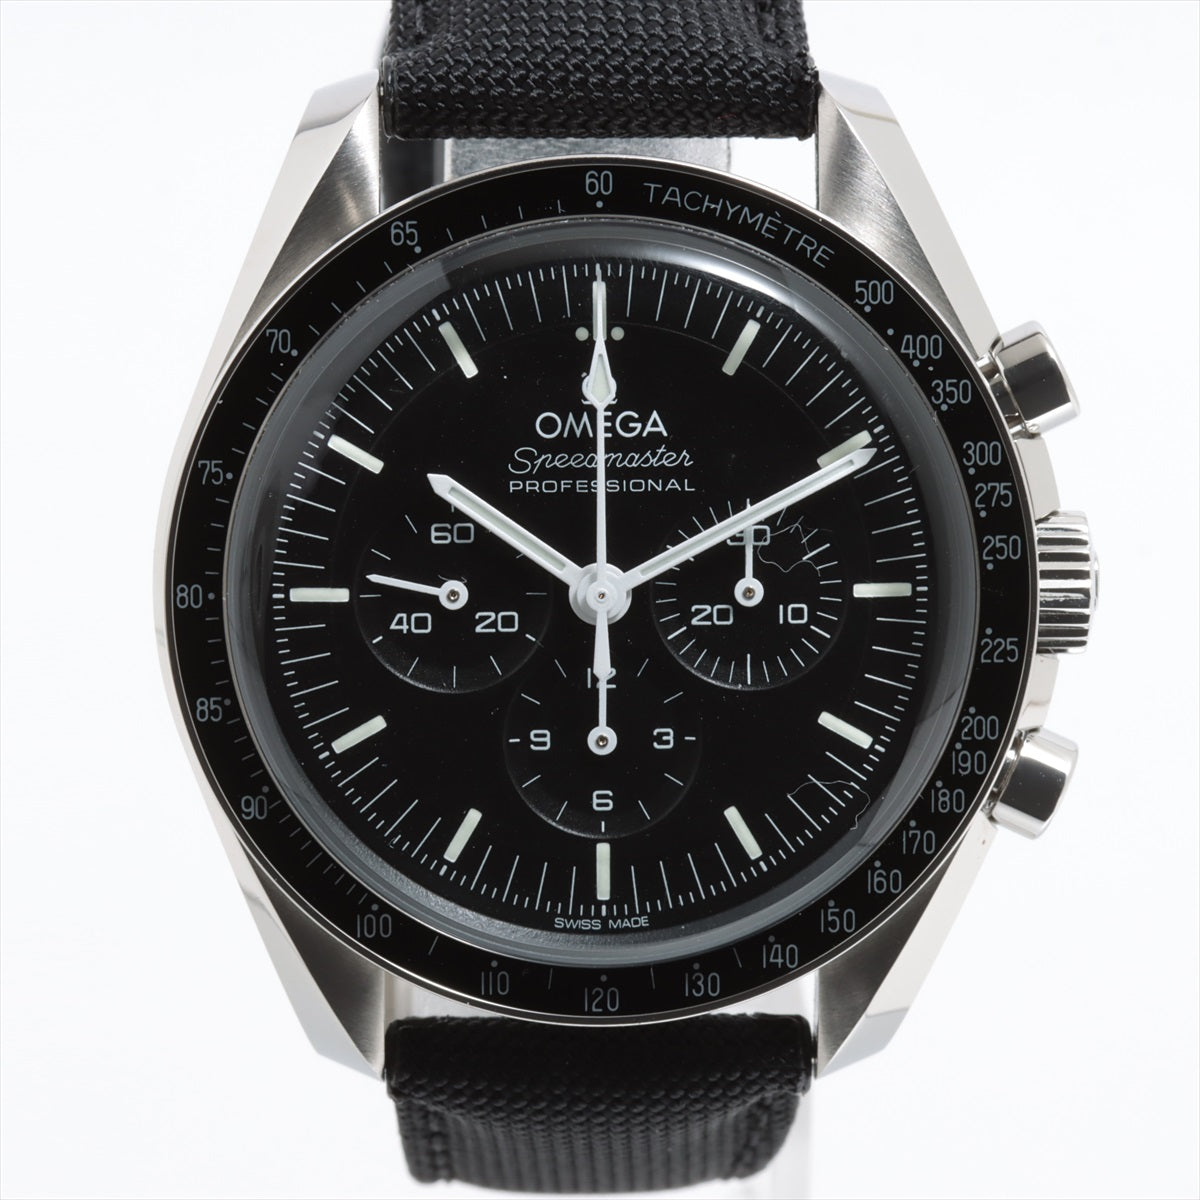 Omega Seamaster Professional Coaxial Master Chronometer 310.32.42.50.01.001 SS Nylon  Black